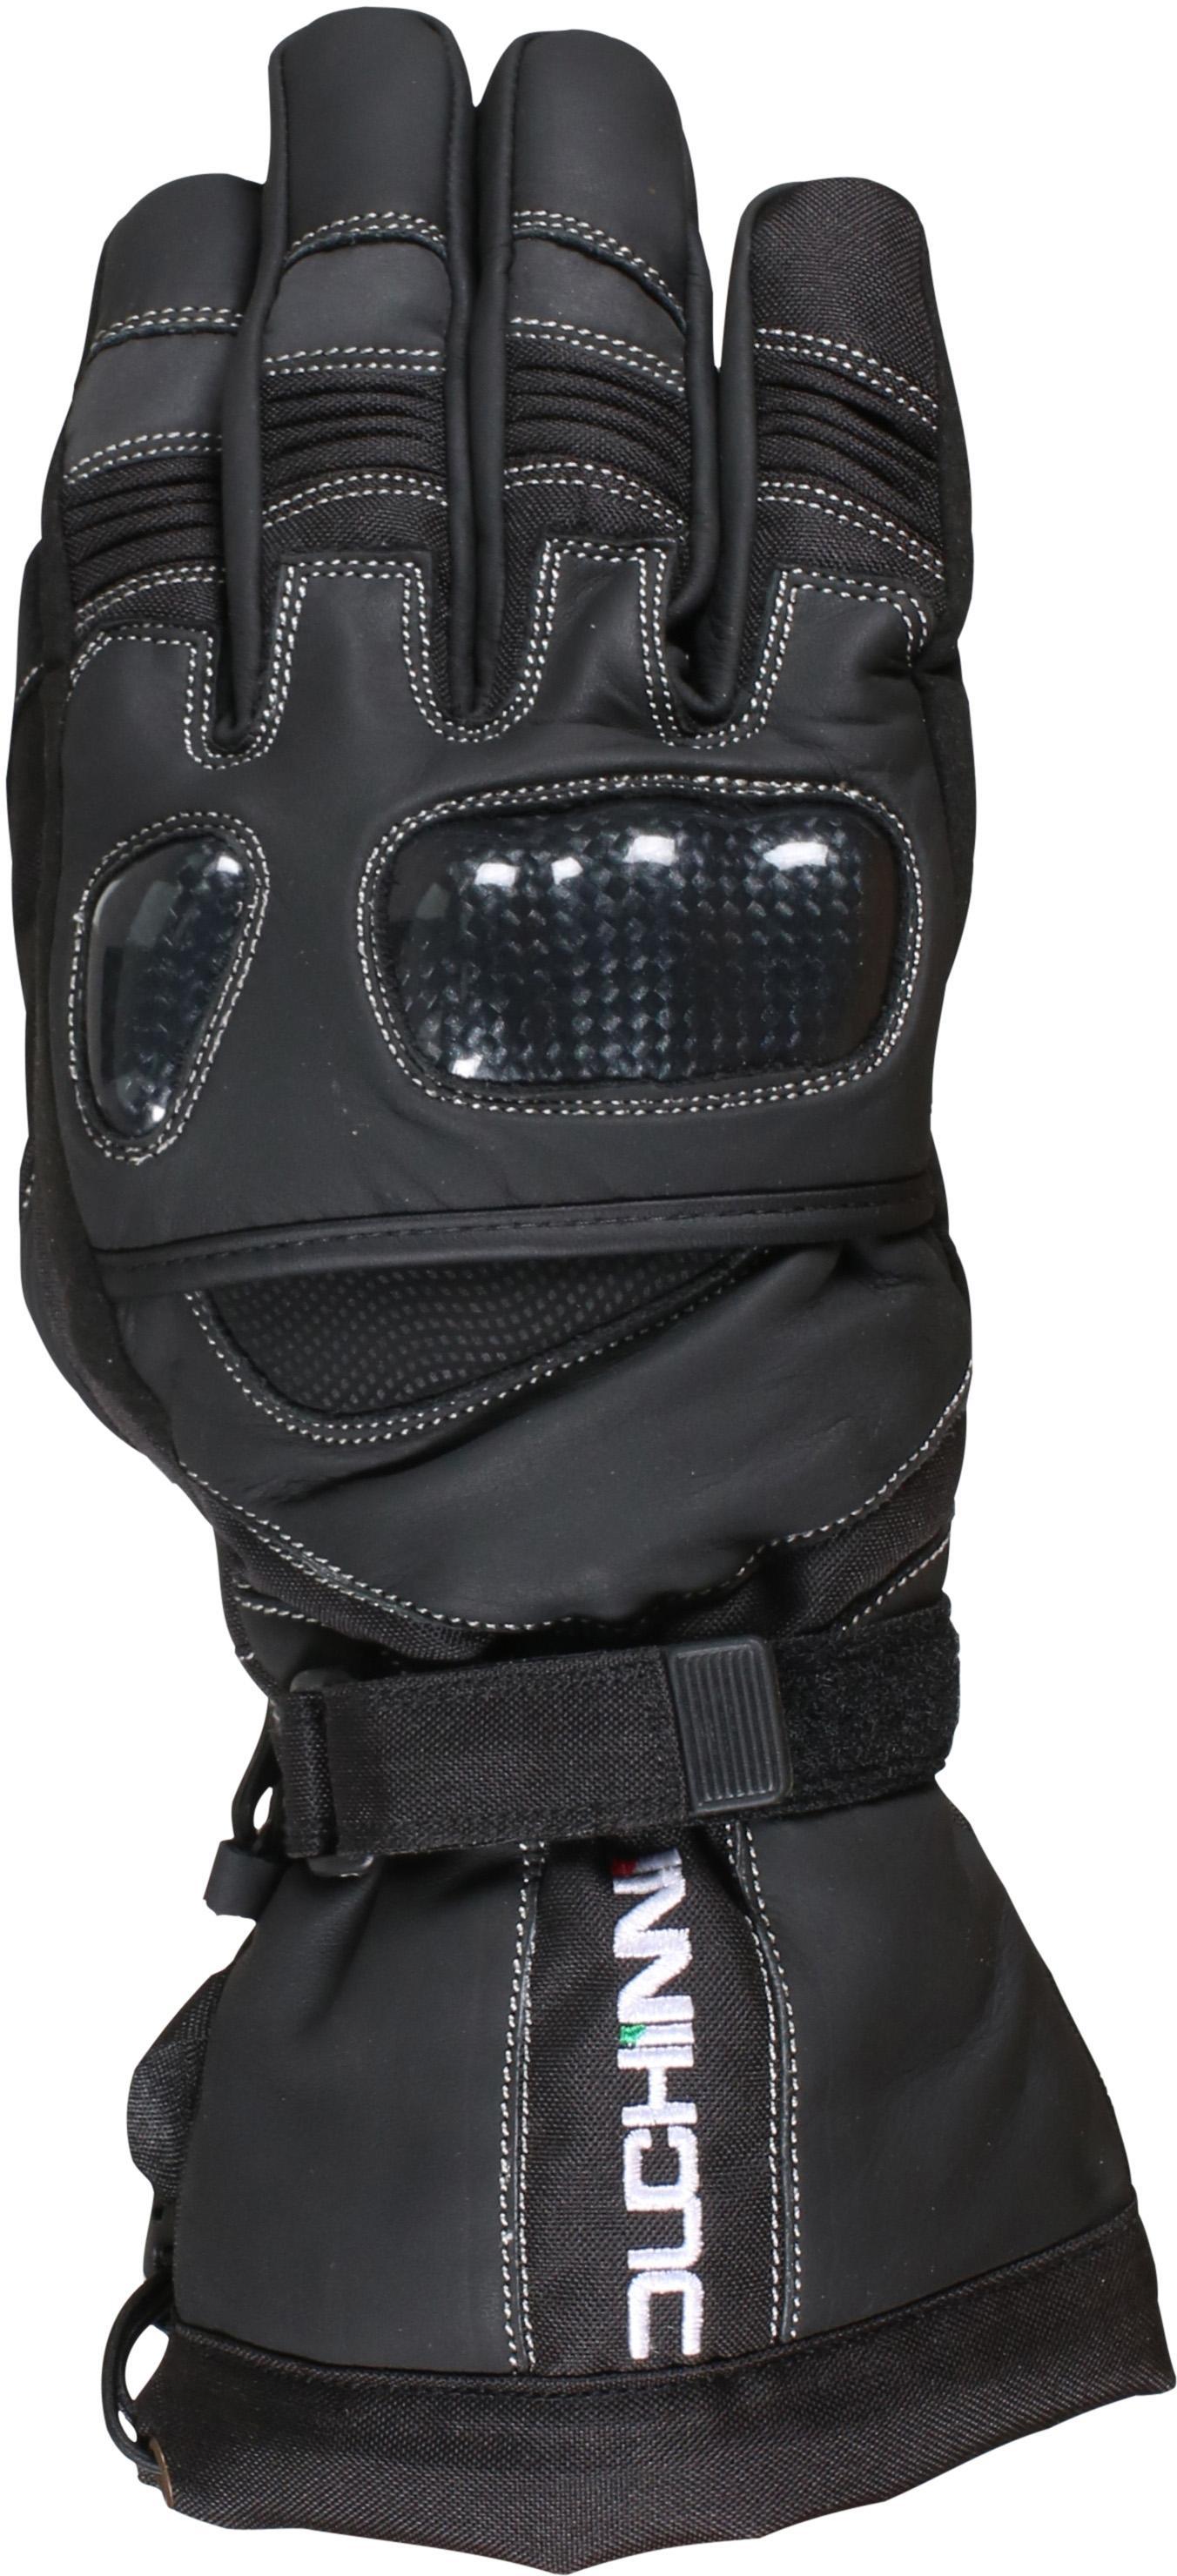 Duchinni Yukon Motorcycle Gloves - Black, 2Xl